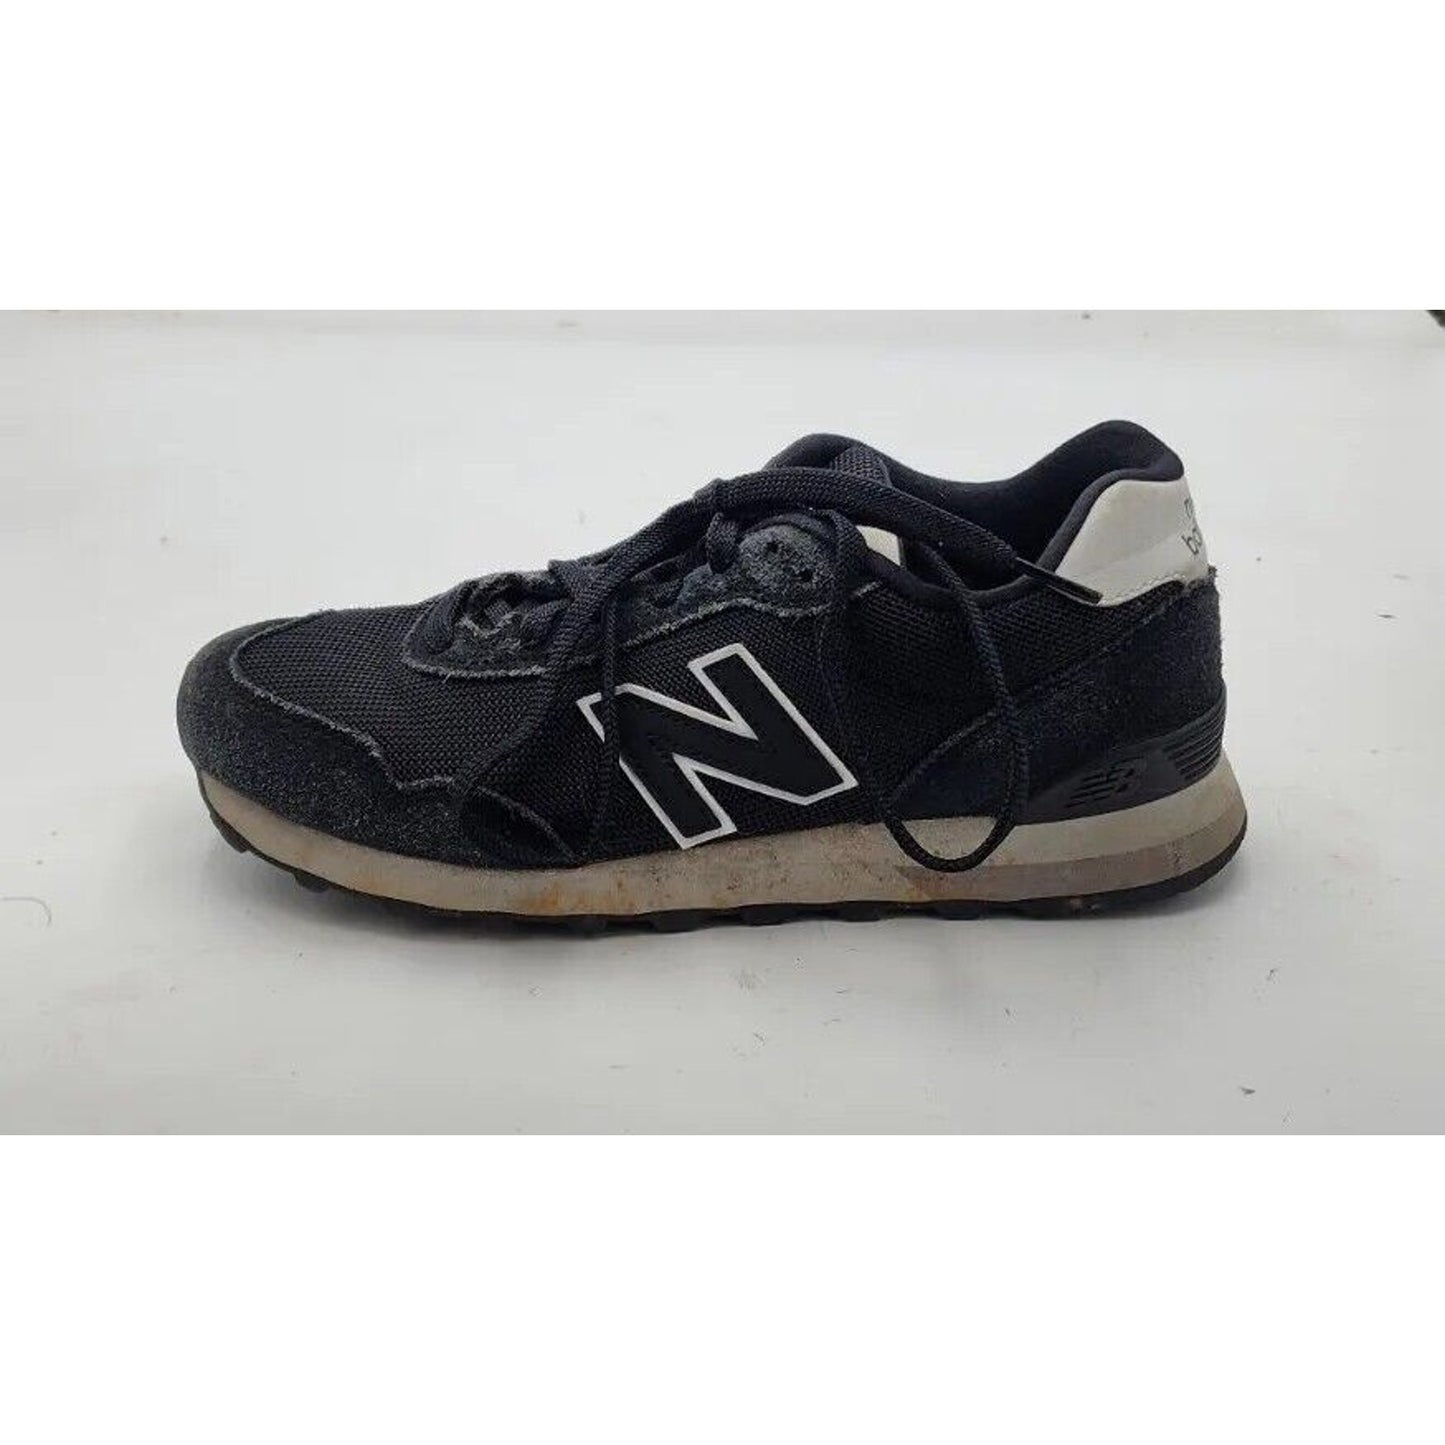 New Balance Womens Sie 8.5 B 515 V3 WL515RA3 Black Casual Shoes Sneakers